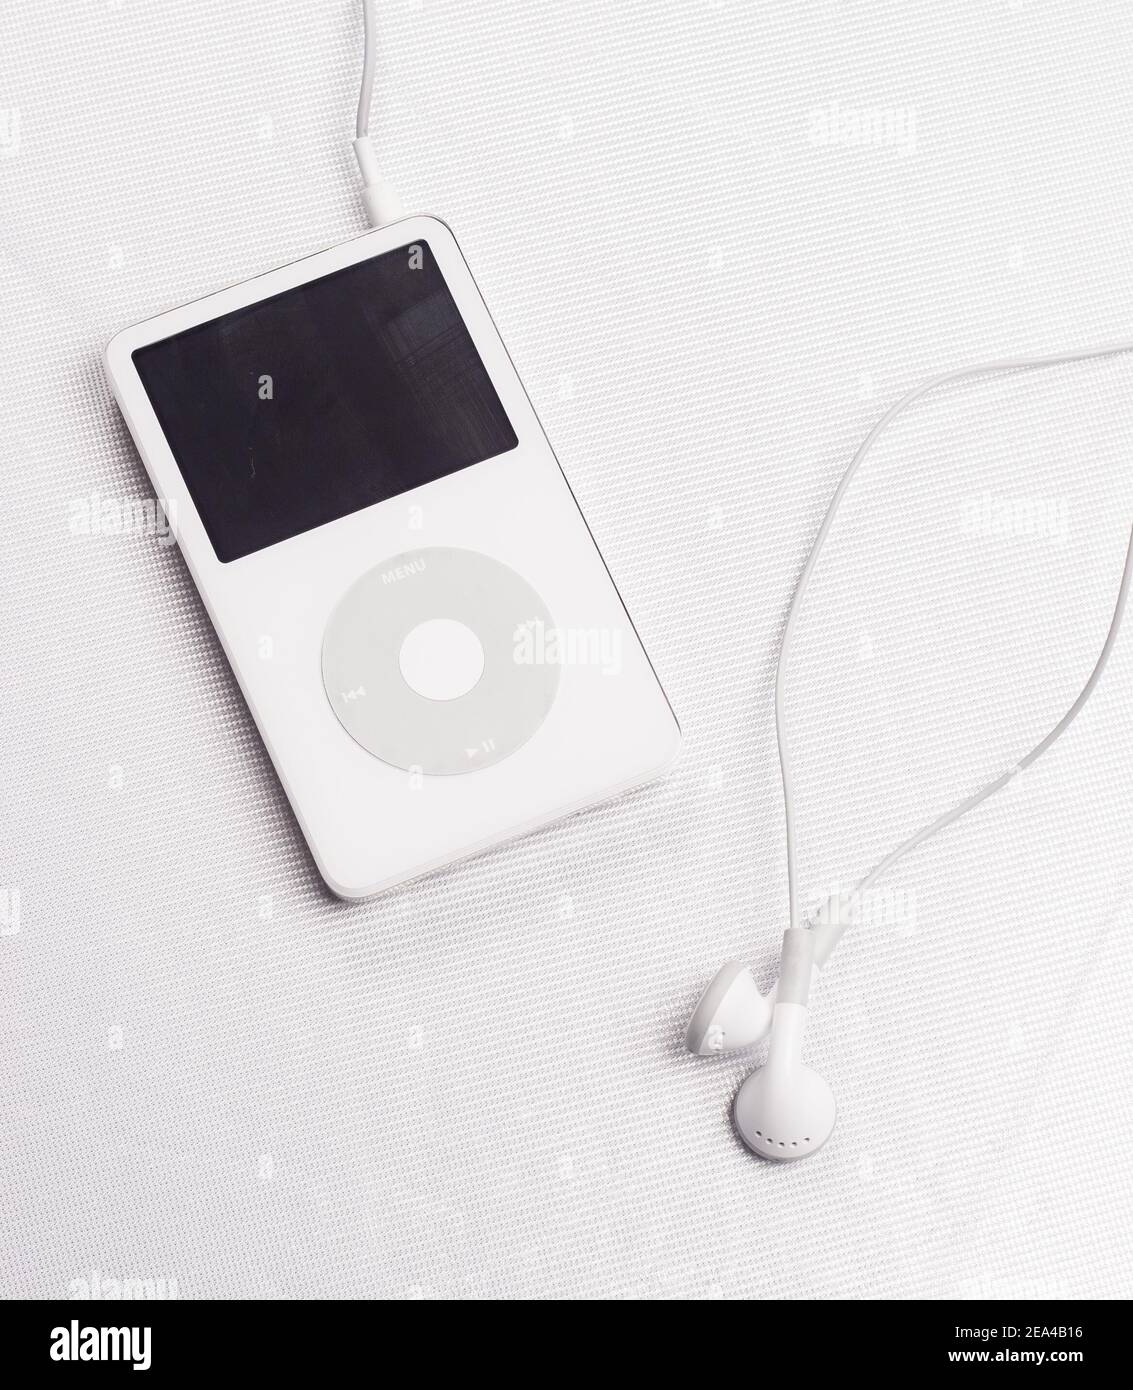 Apple iPod Classic 5th Generation White 30GB, 2007 Stock Photo